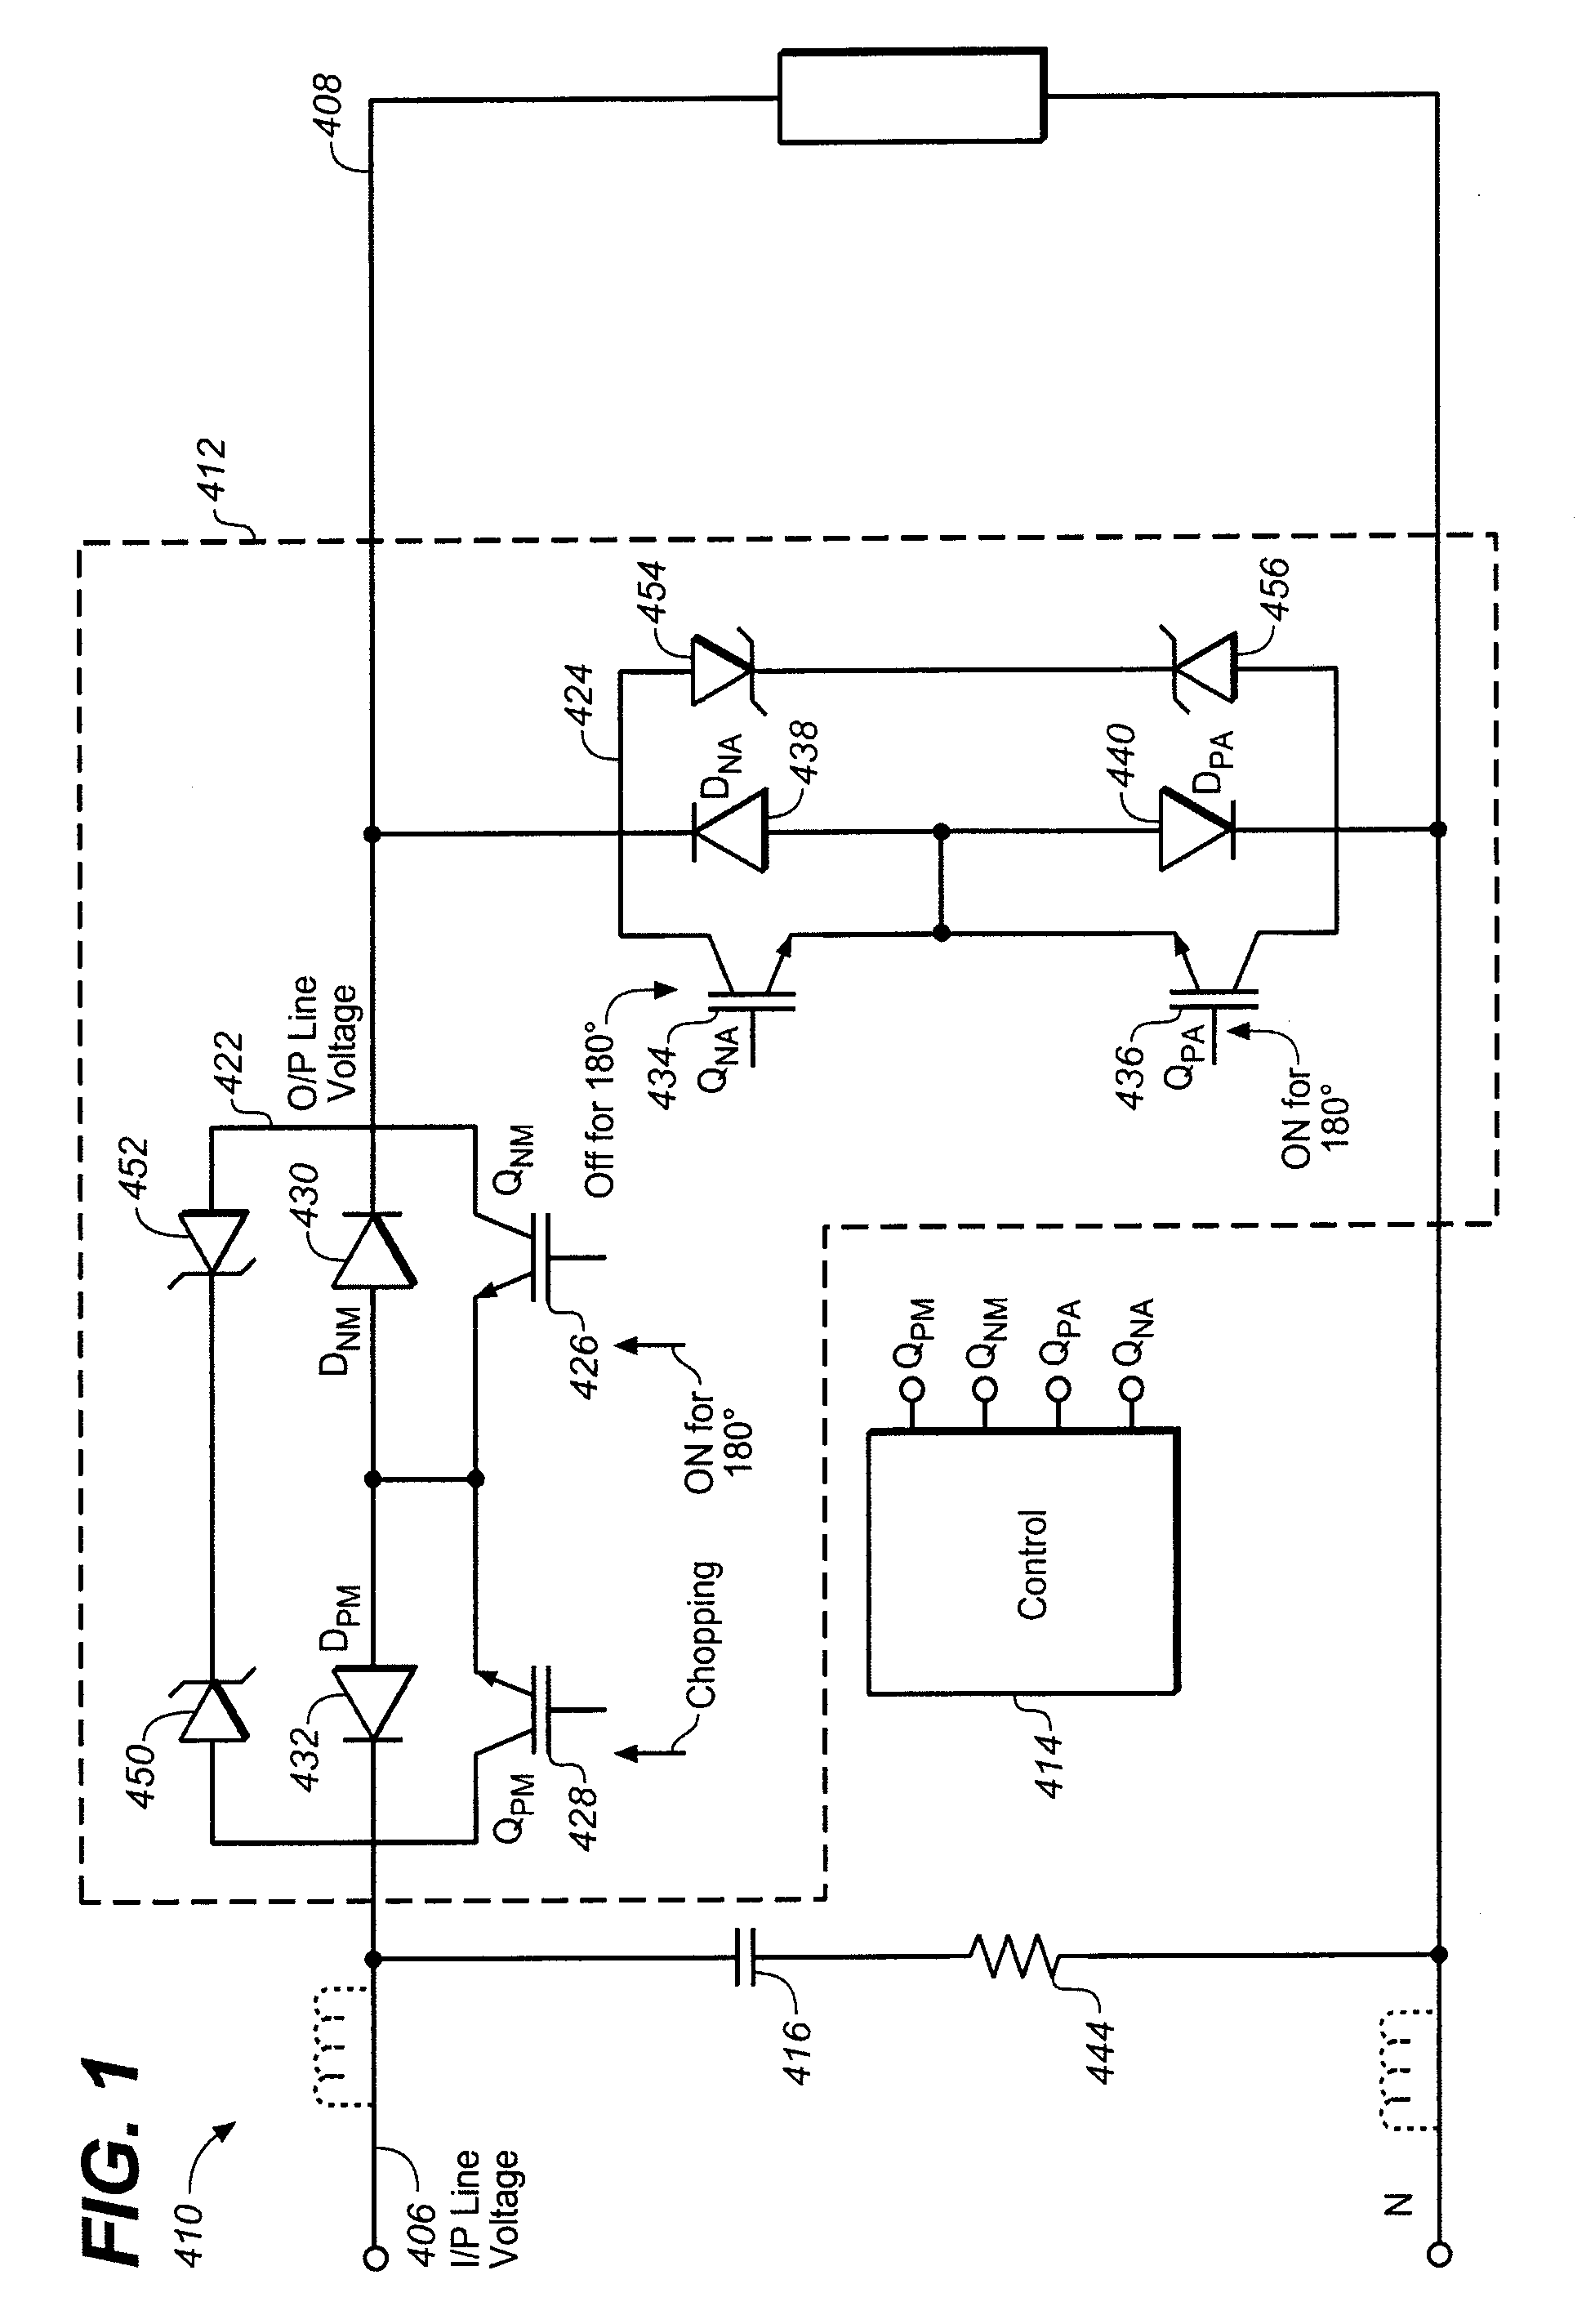 System and method for AC voltage regulation